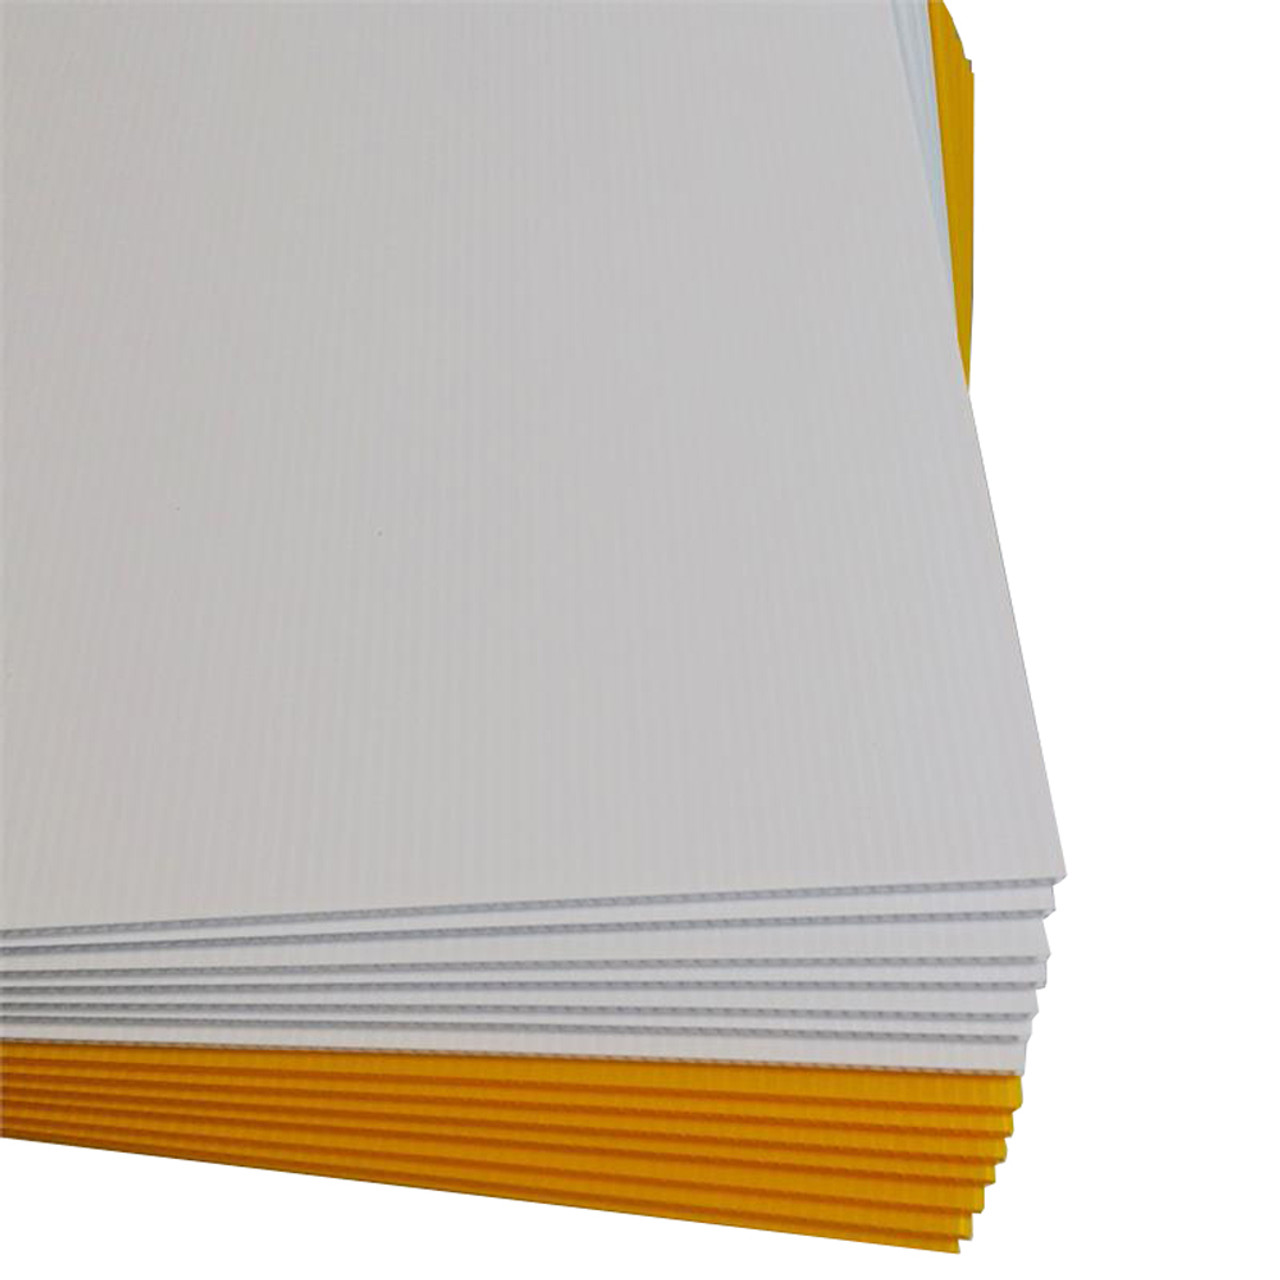 White Top Corrugated Sheet - 12 x 15